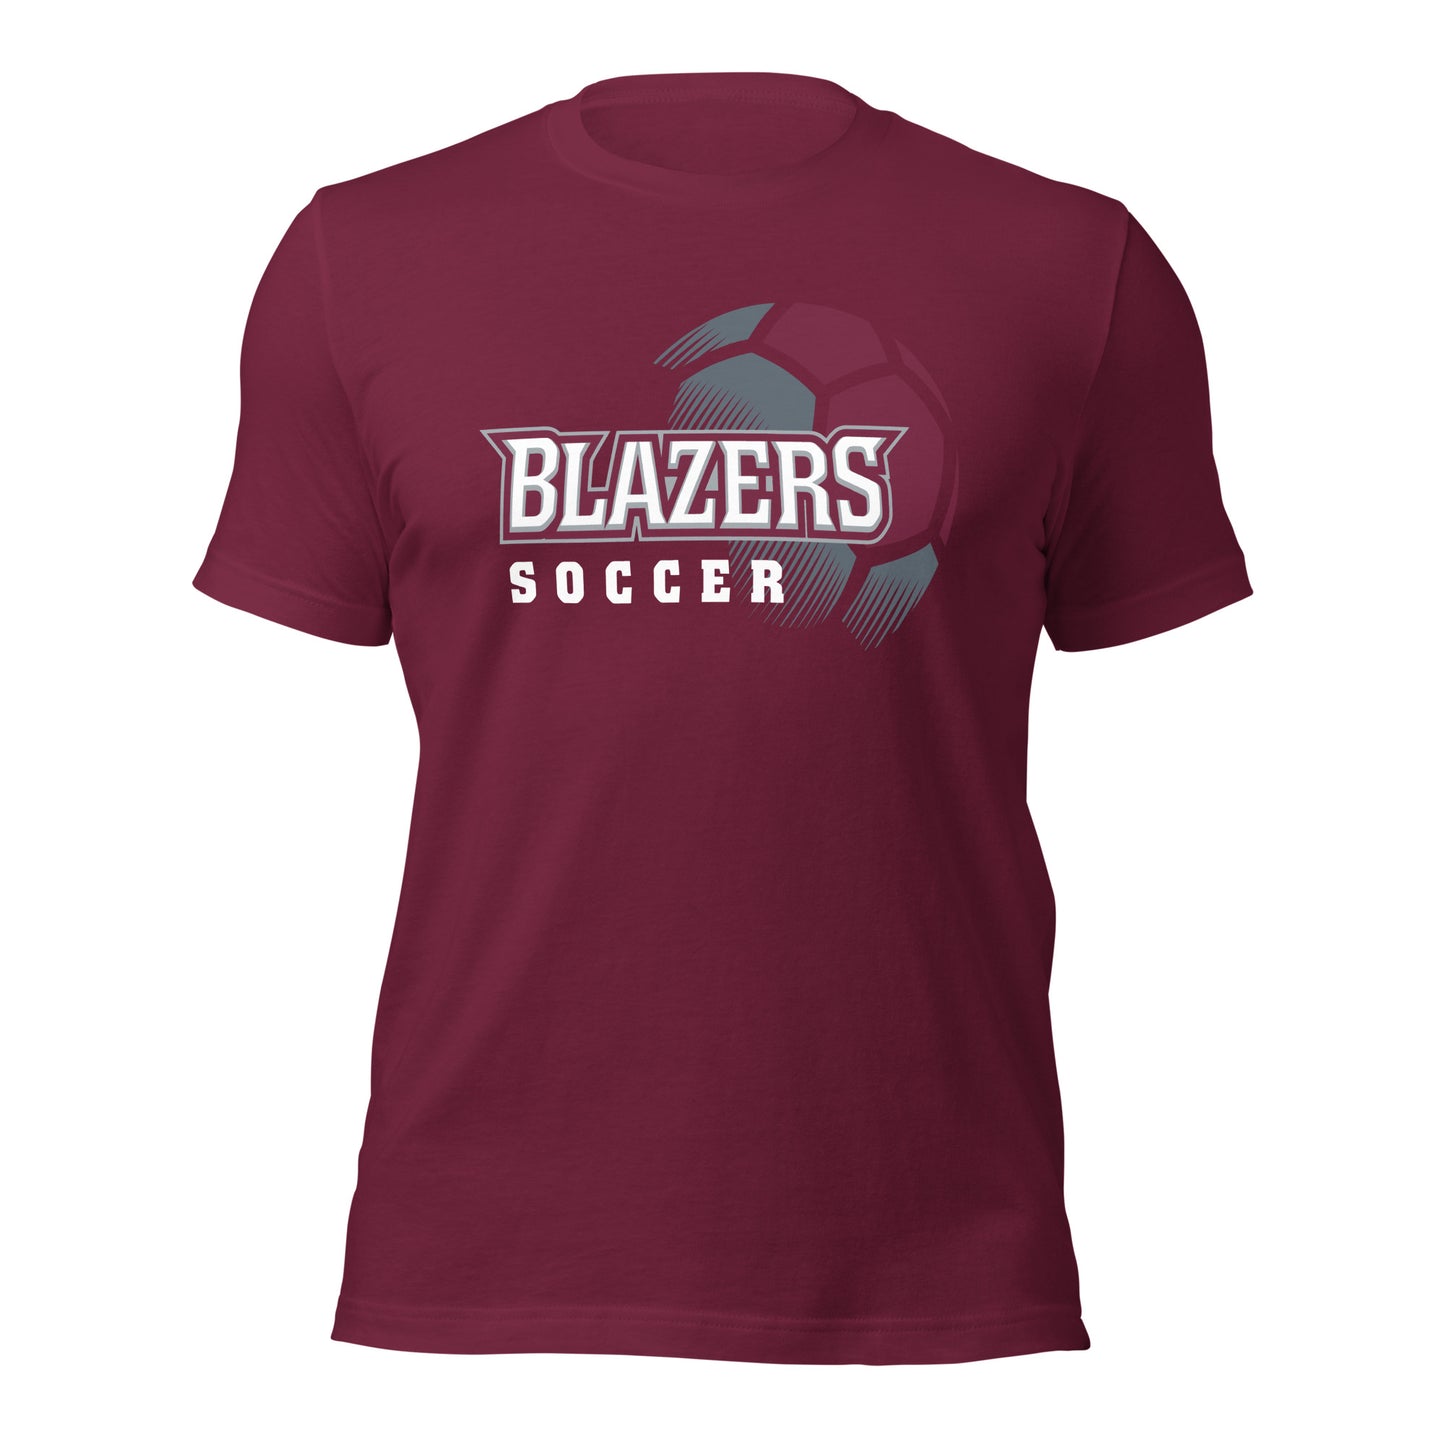 Blazers Soccer Unisex Short-Sleeve T-Shirt Dark Colors Second Design